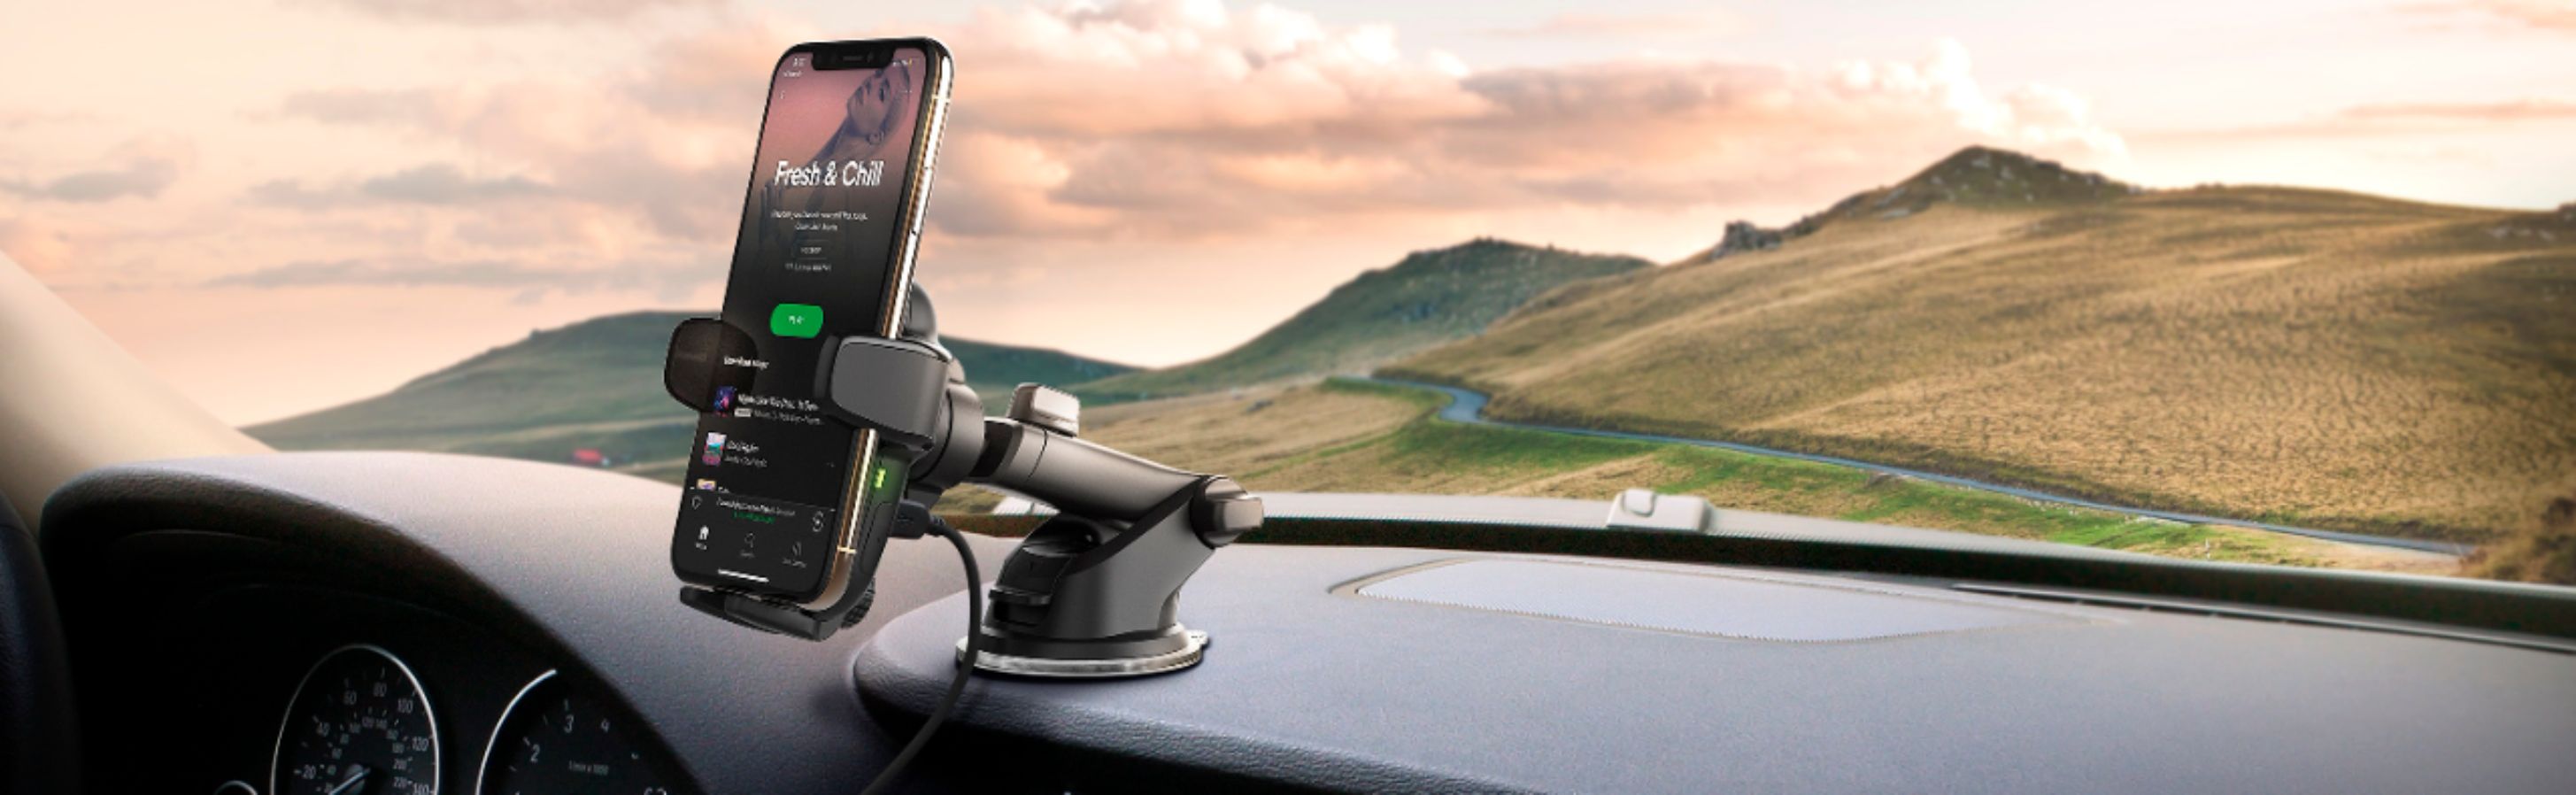 Iottie Auto Sense Qi Wireless Charging Automatic Clamping Dash Mount